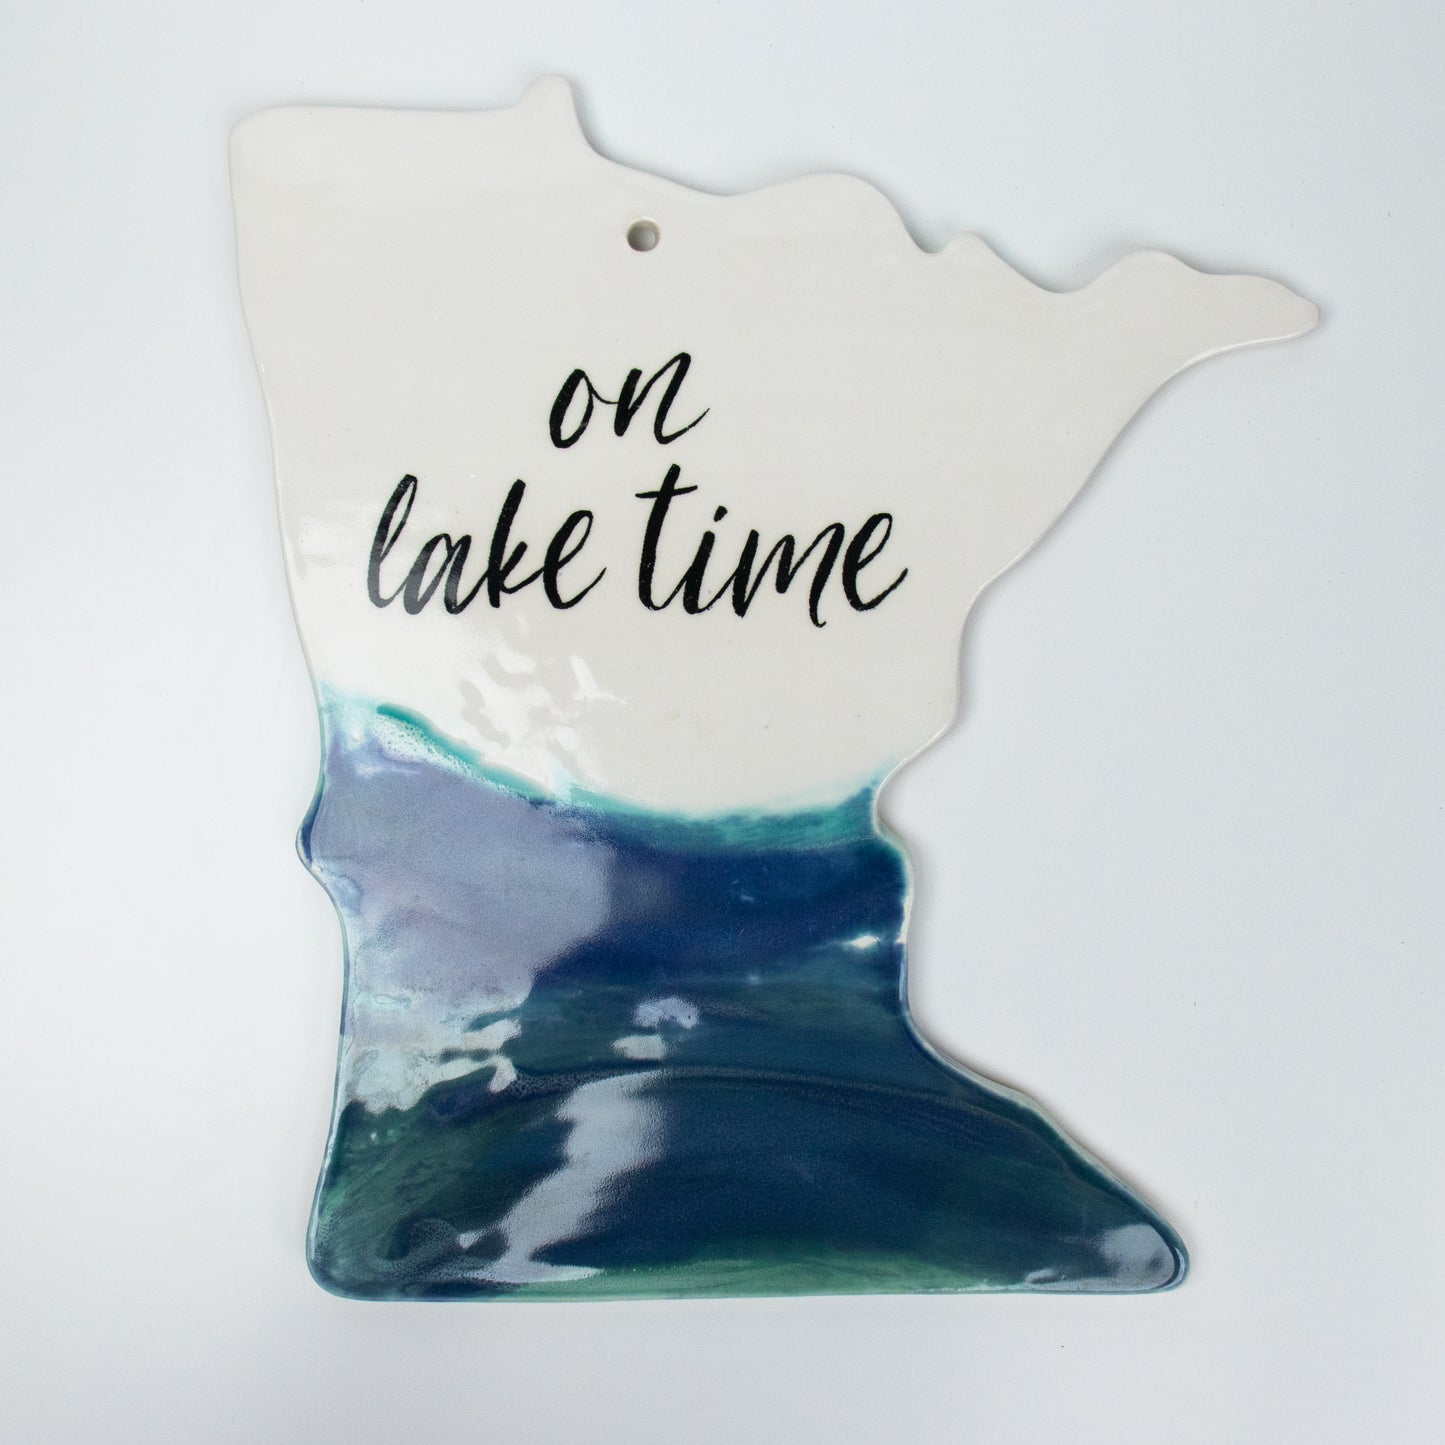 "On Lake Time" Minnesota Cheese Plate